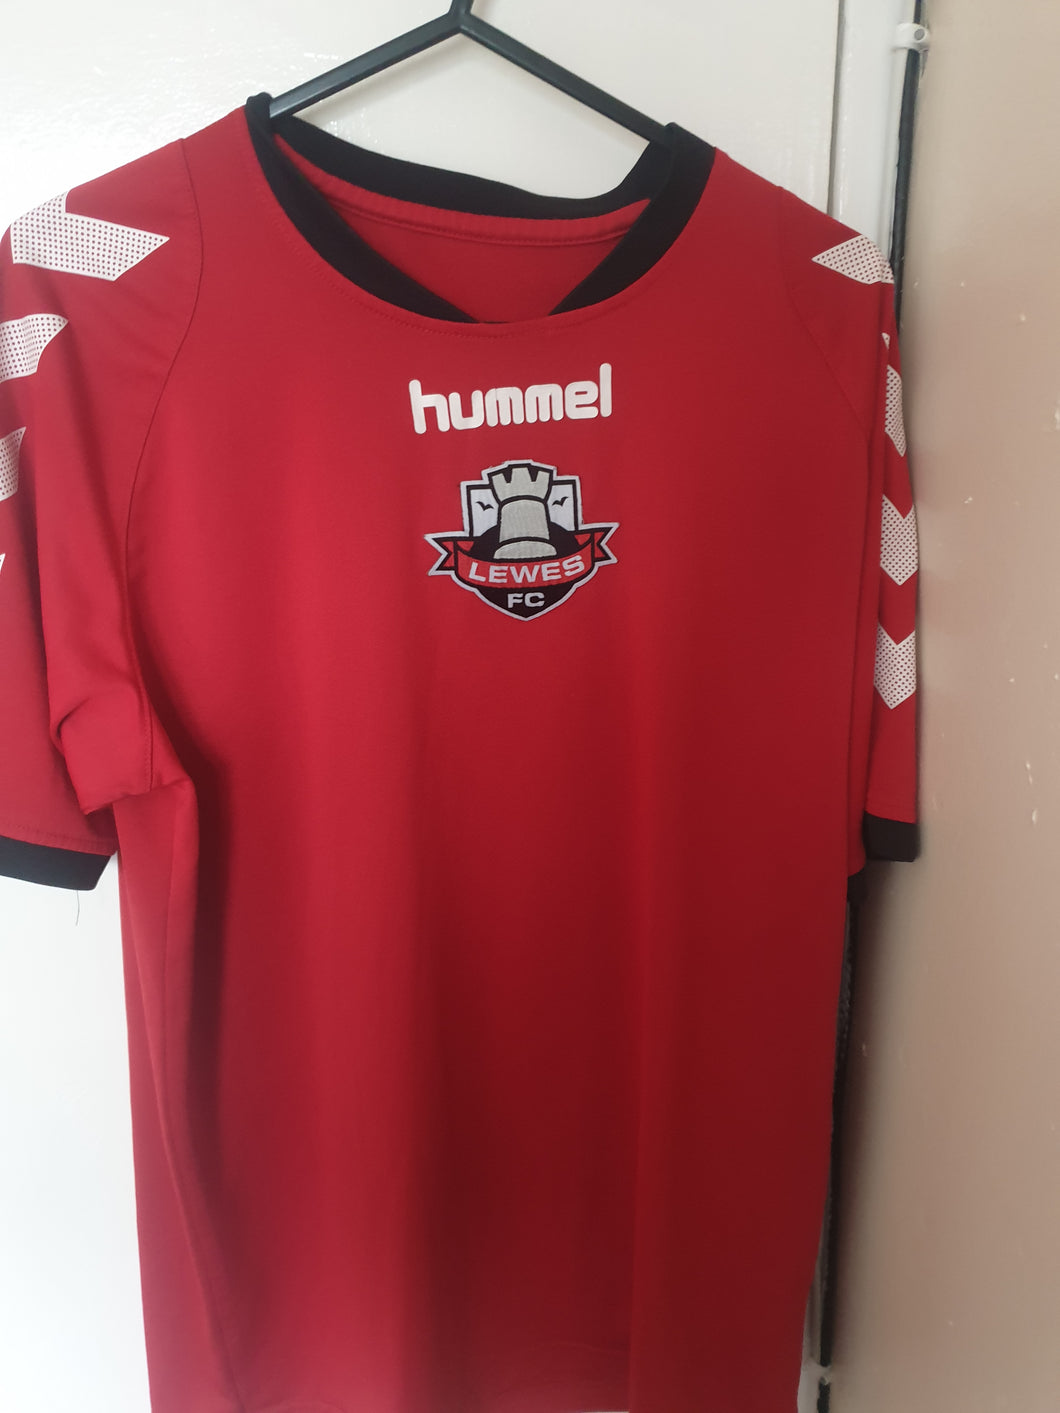 Lewes Fc Training Football Shirt (Size Small)